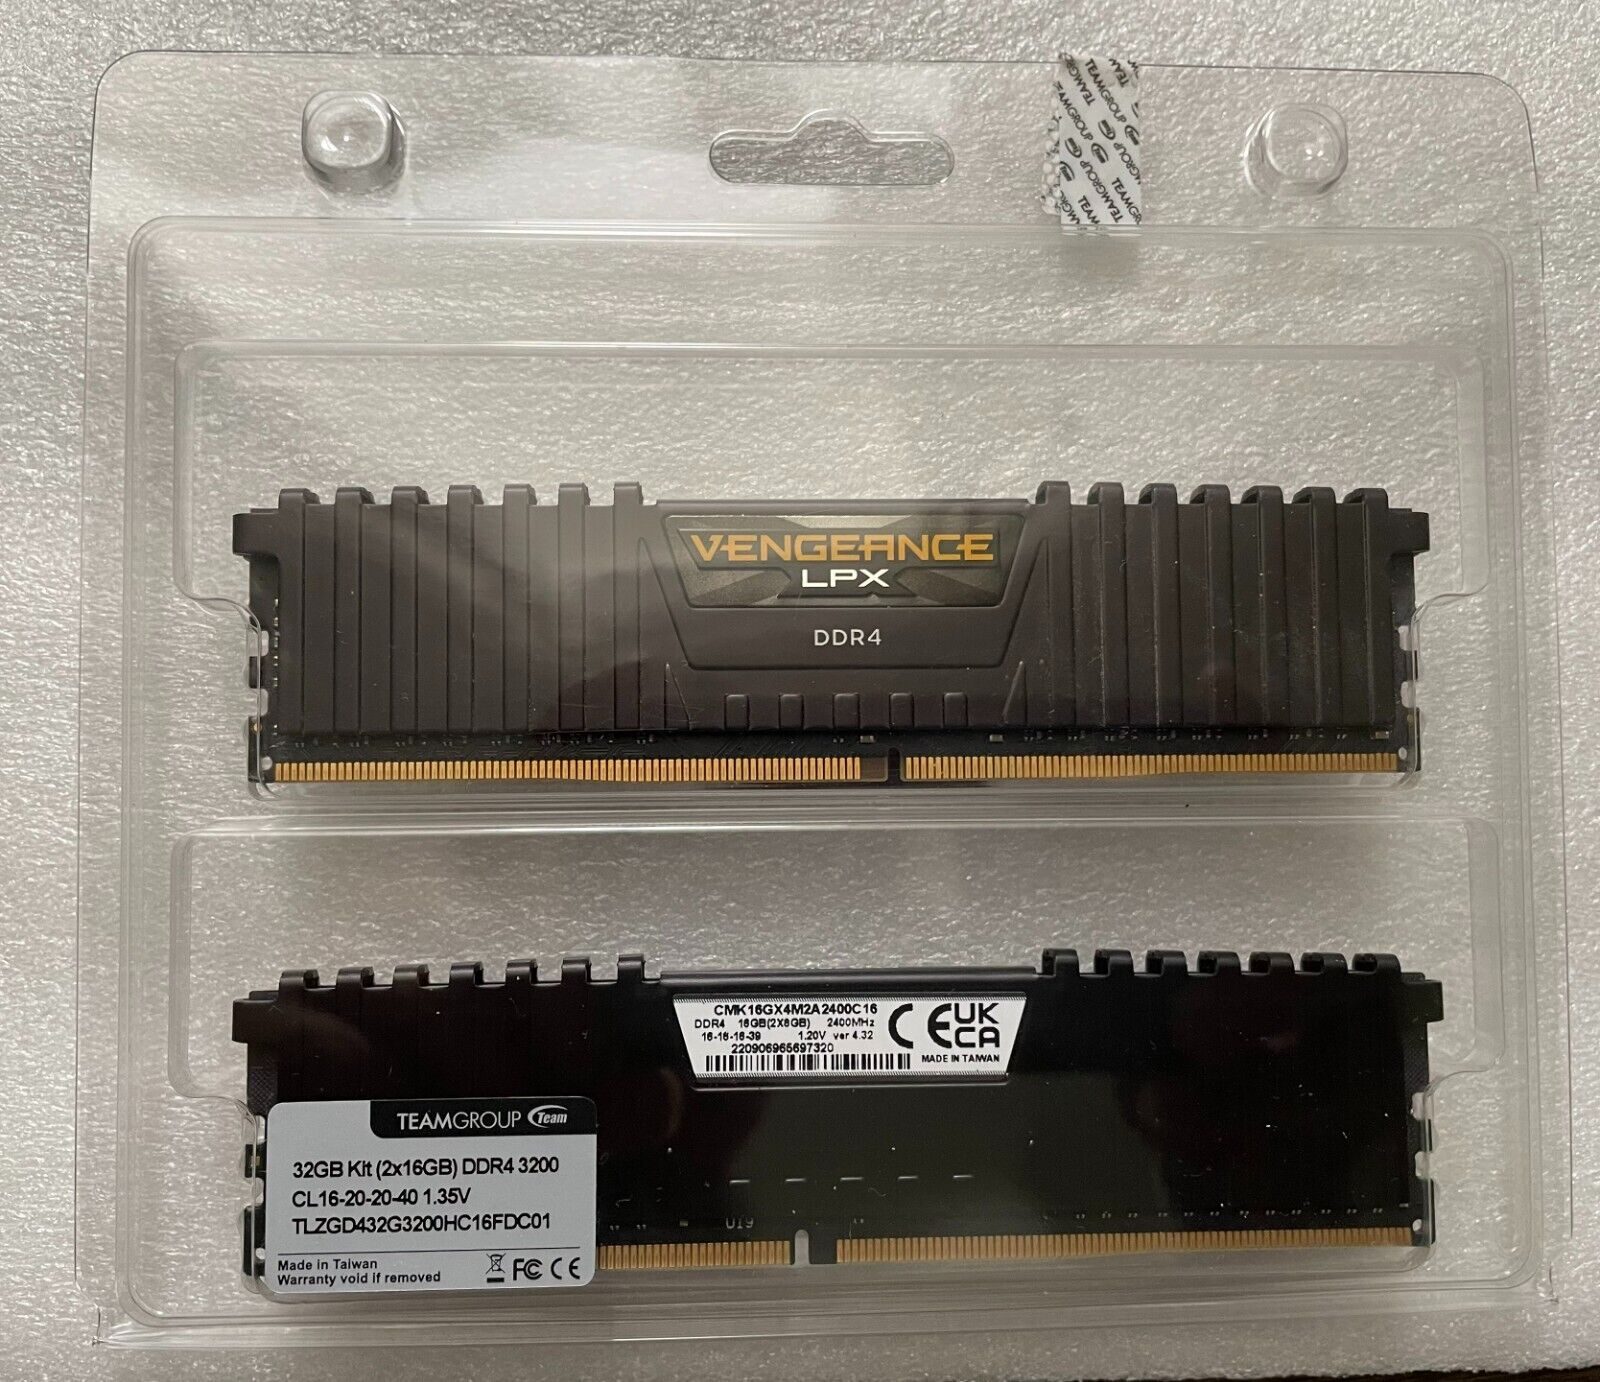 Corsair Vengeance LPX 32GB Kit (2x16GB) DDR4 2400MHz CMK16GX4M2A2400C 16